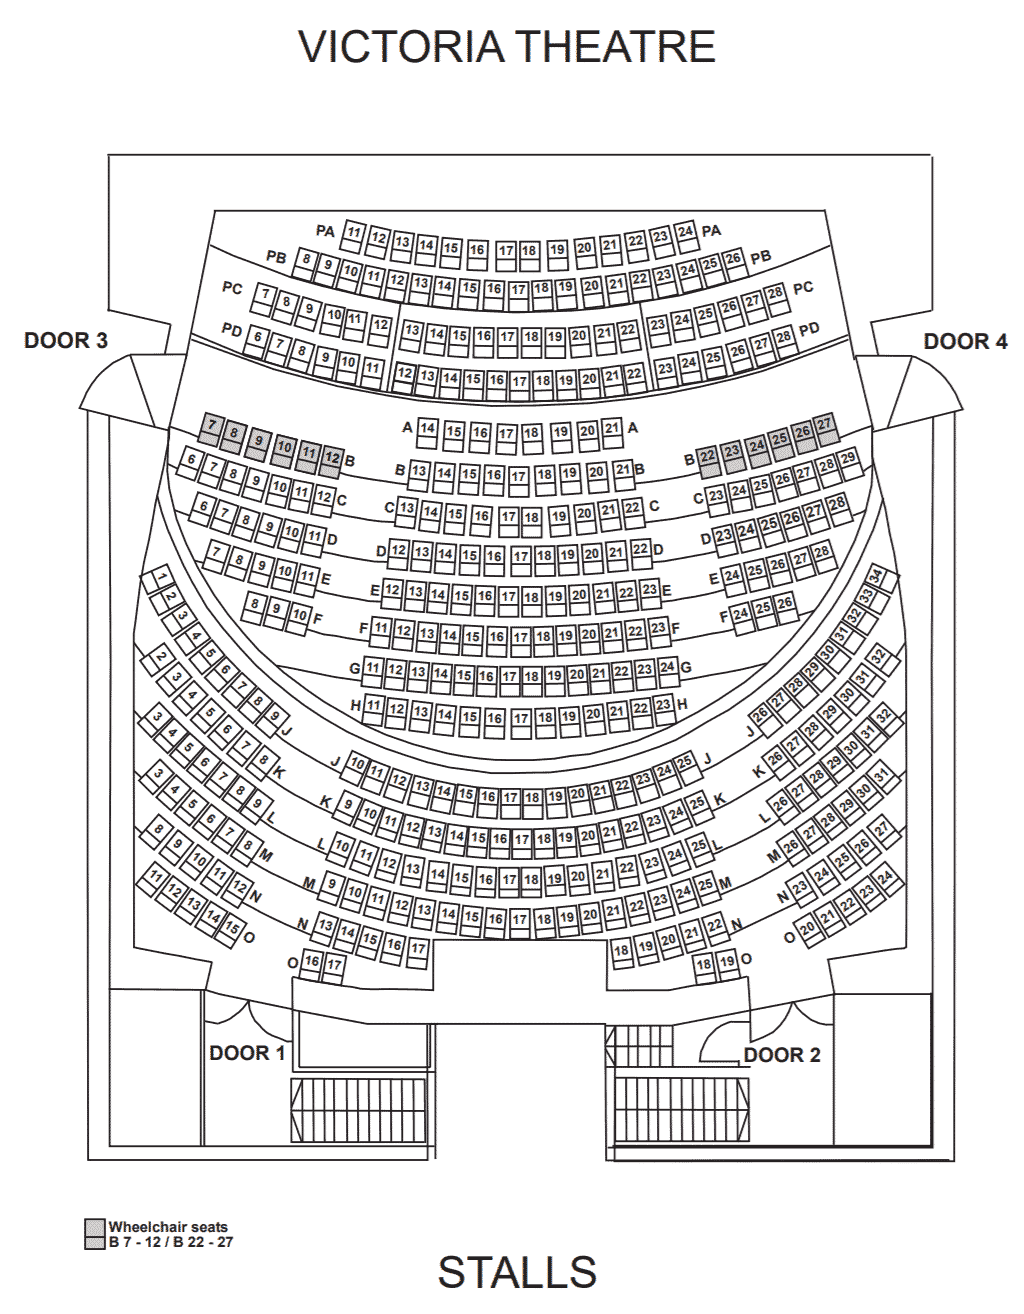 Victoria Theatre & Victoria Concert Hall - History & Seating Plan ...